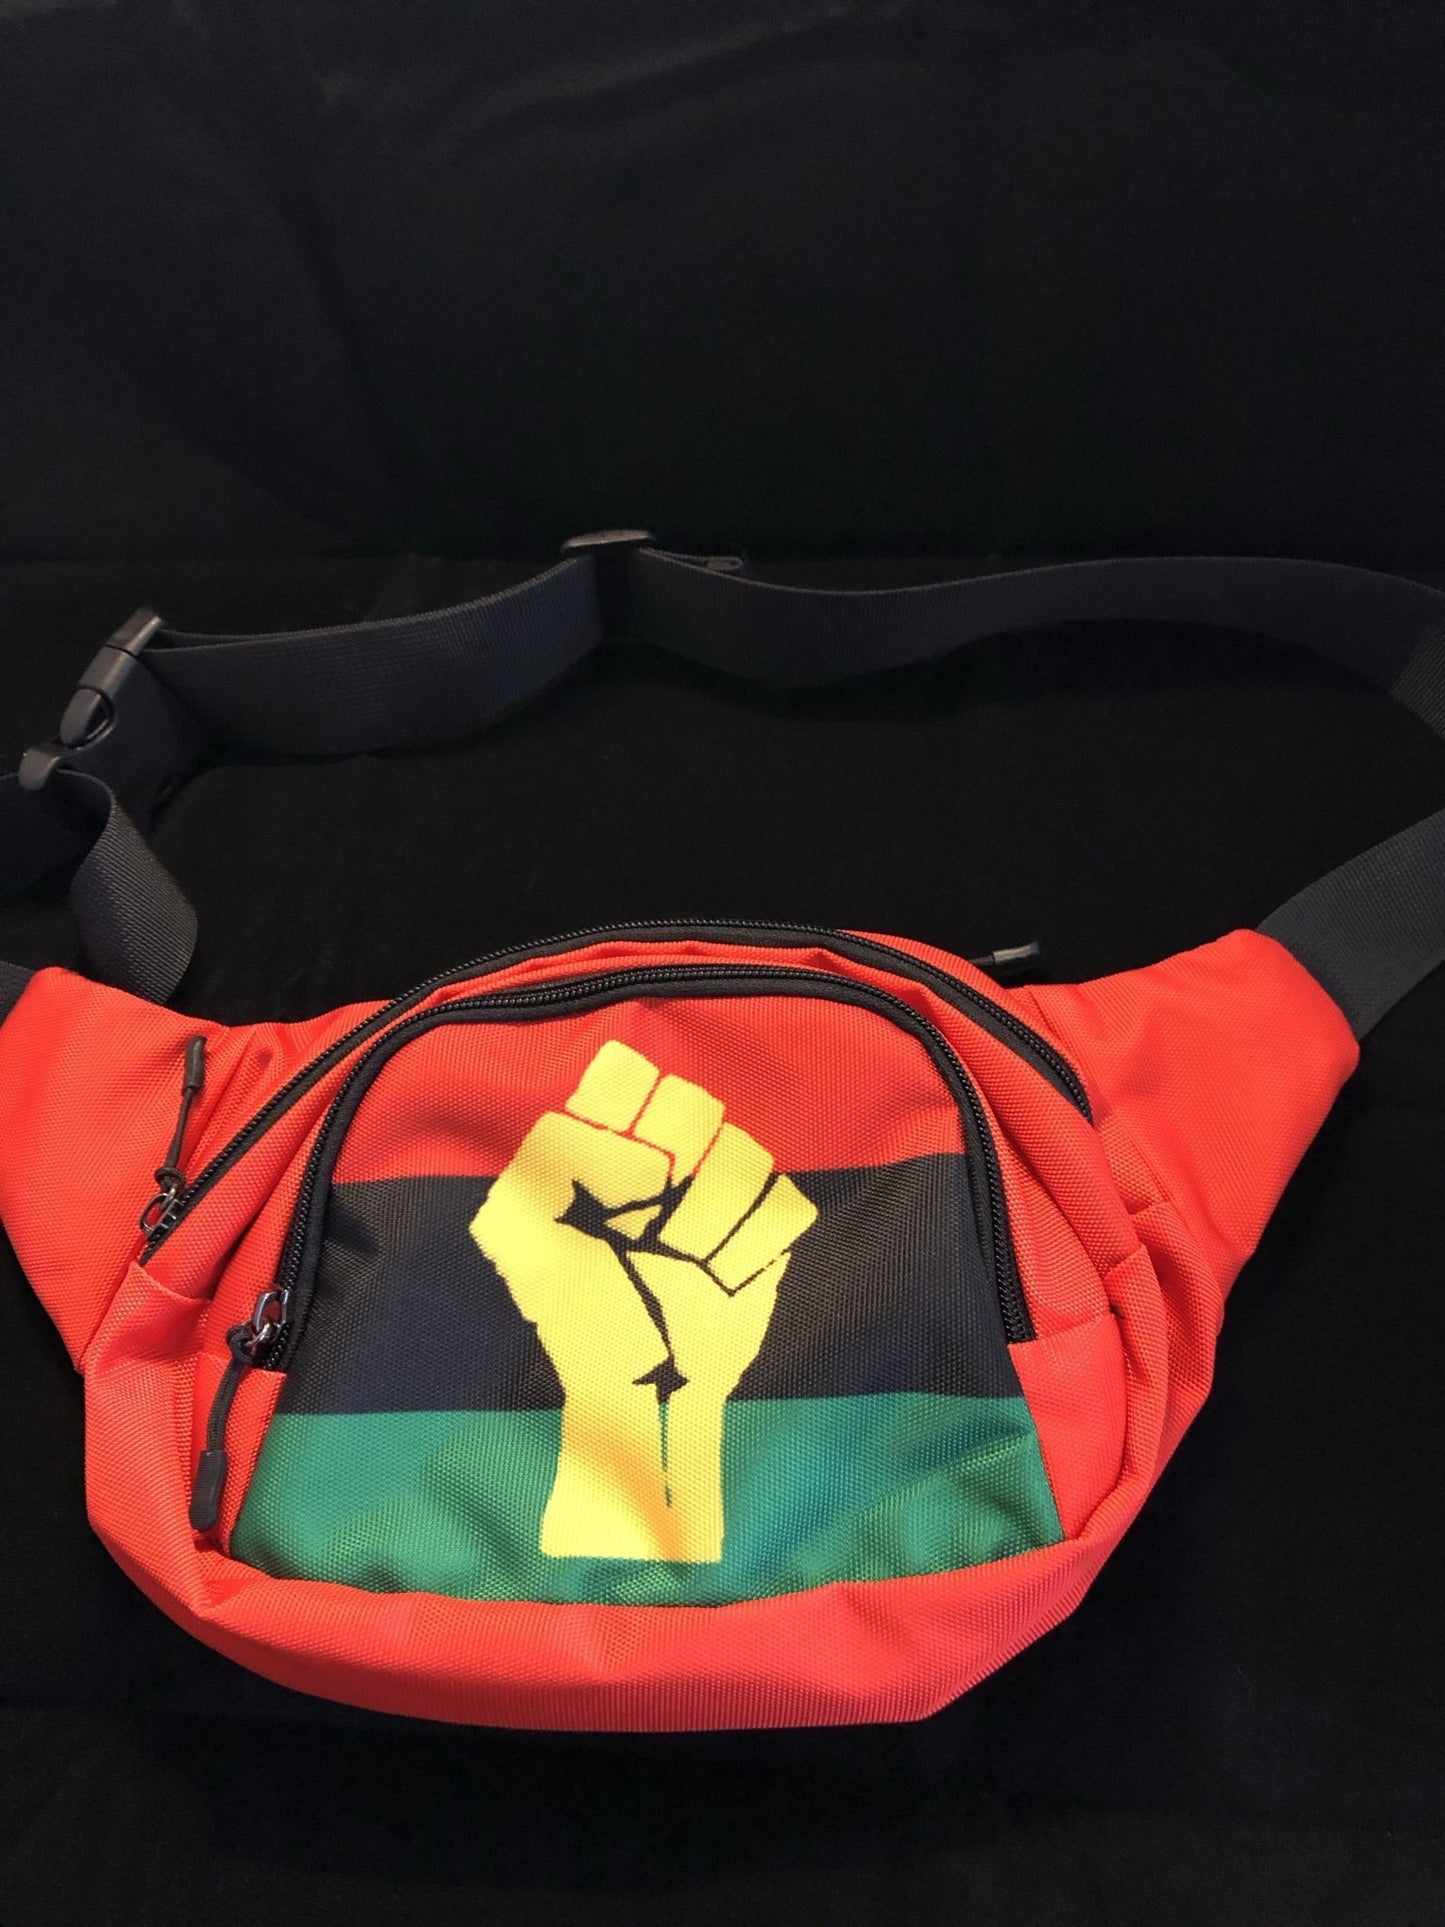 RBG Pan African Flag w/ Yellow Fist Unisex Waist Bag - Chocolate Ancestor